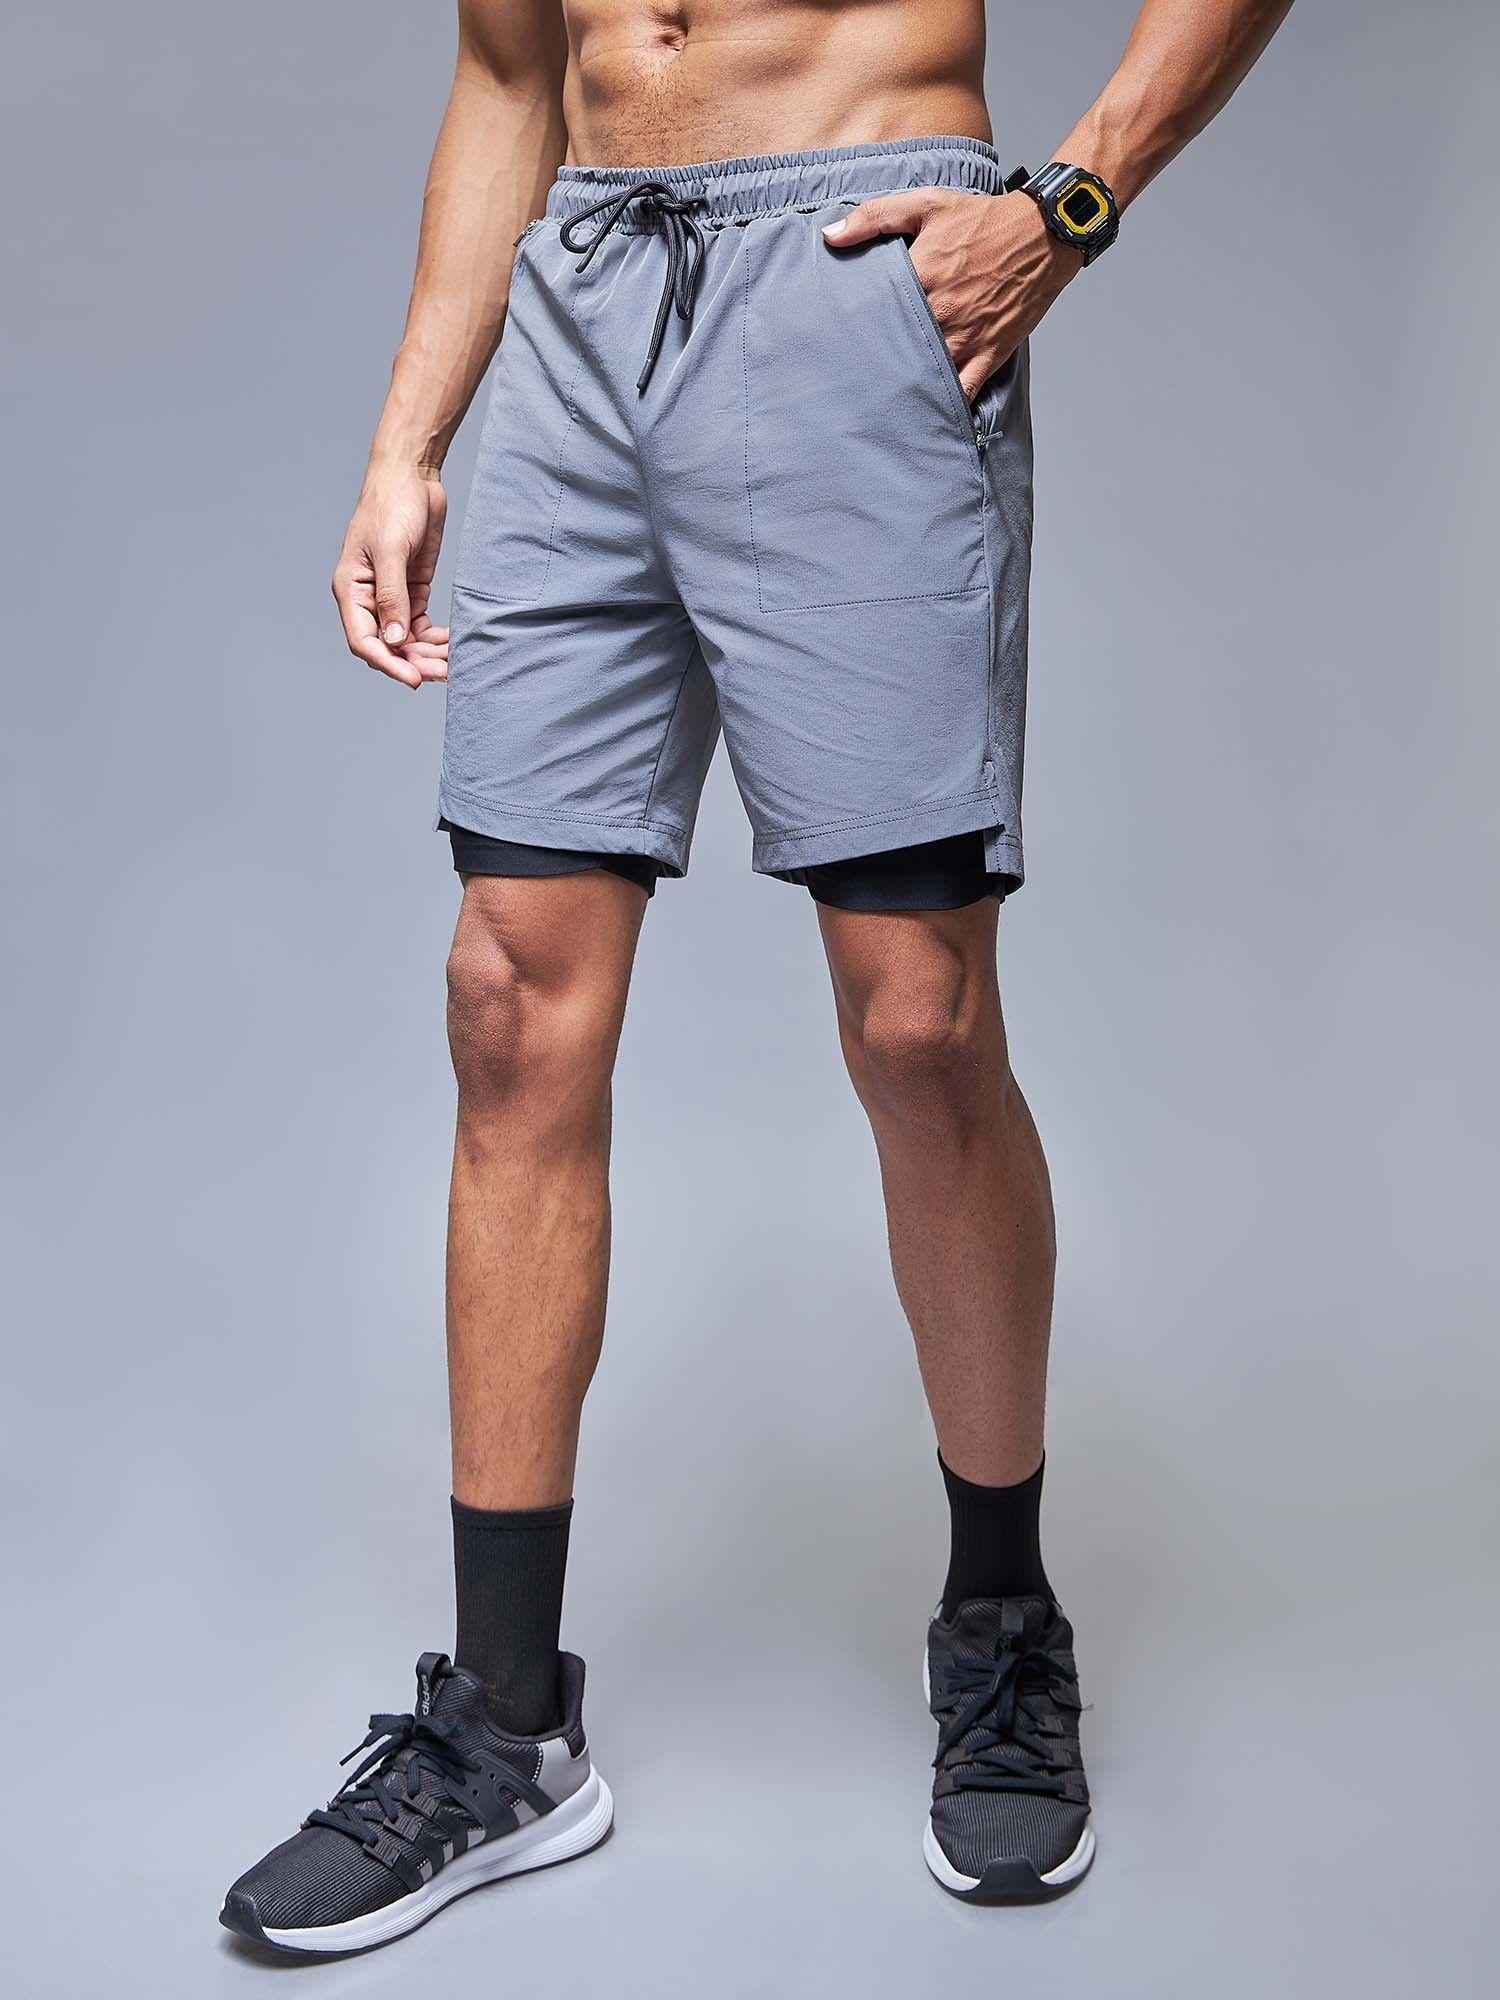 grey-duoflex-shorts